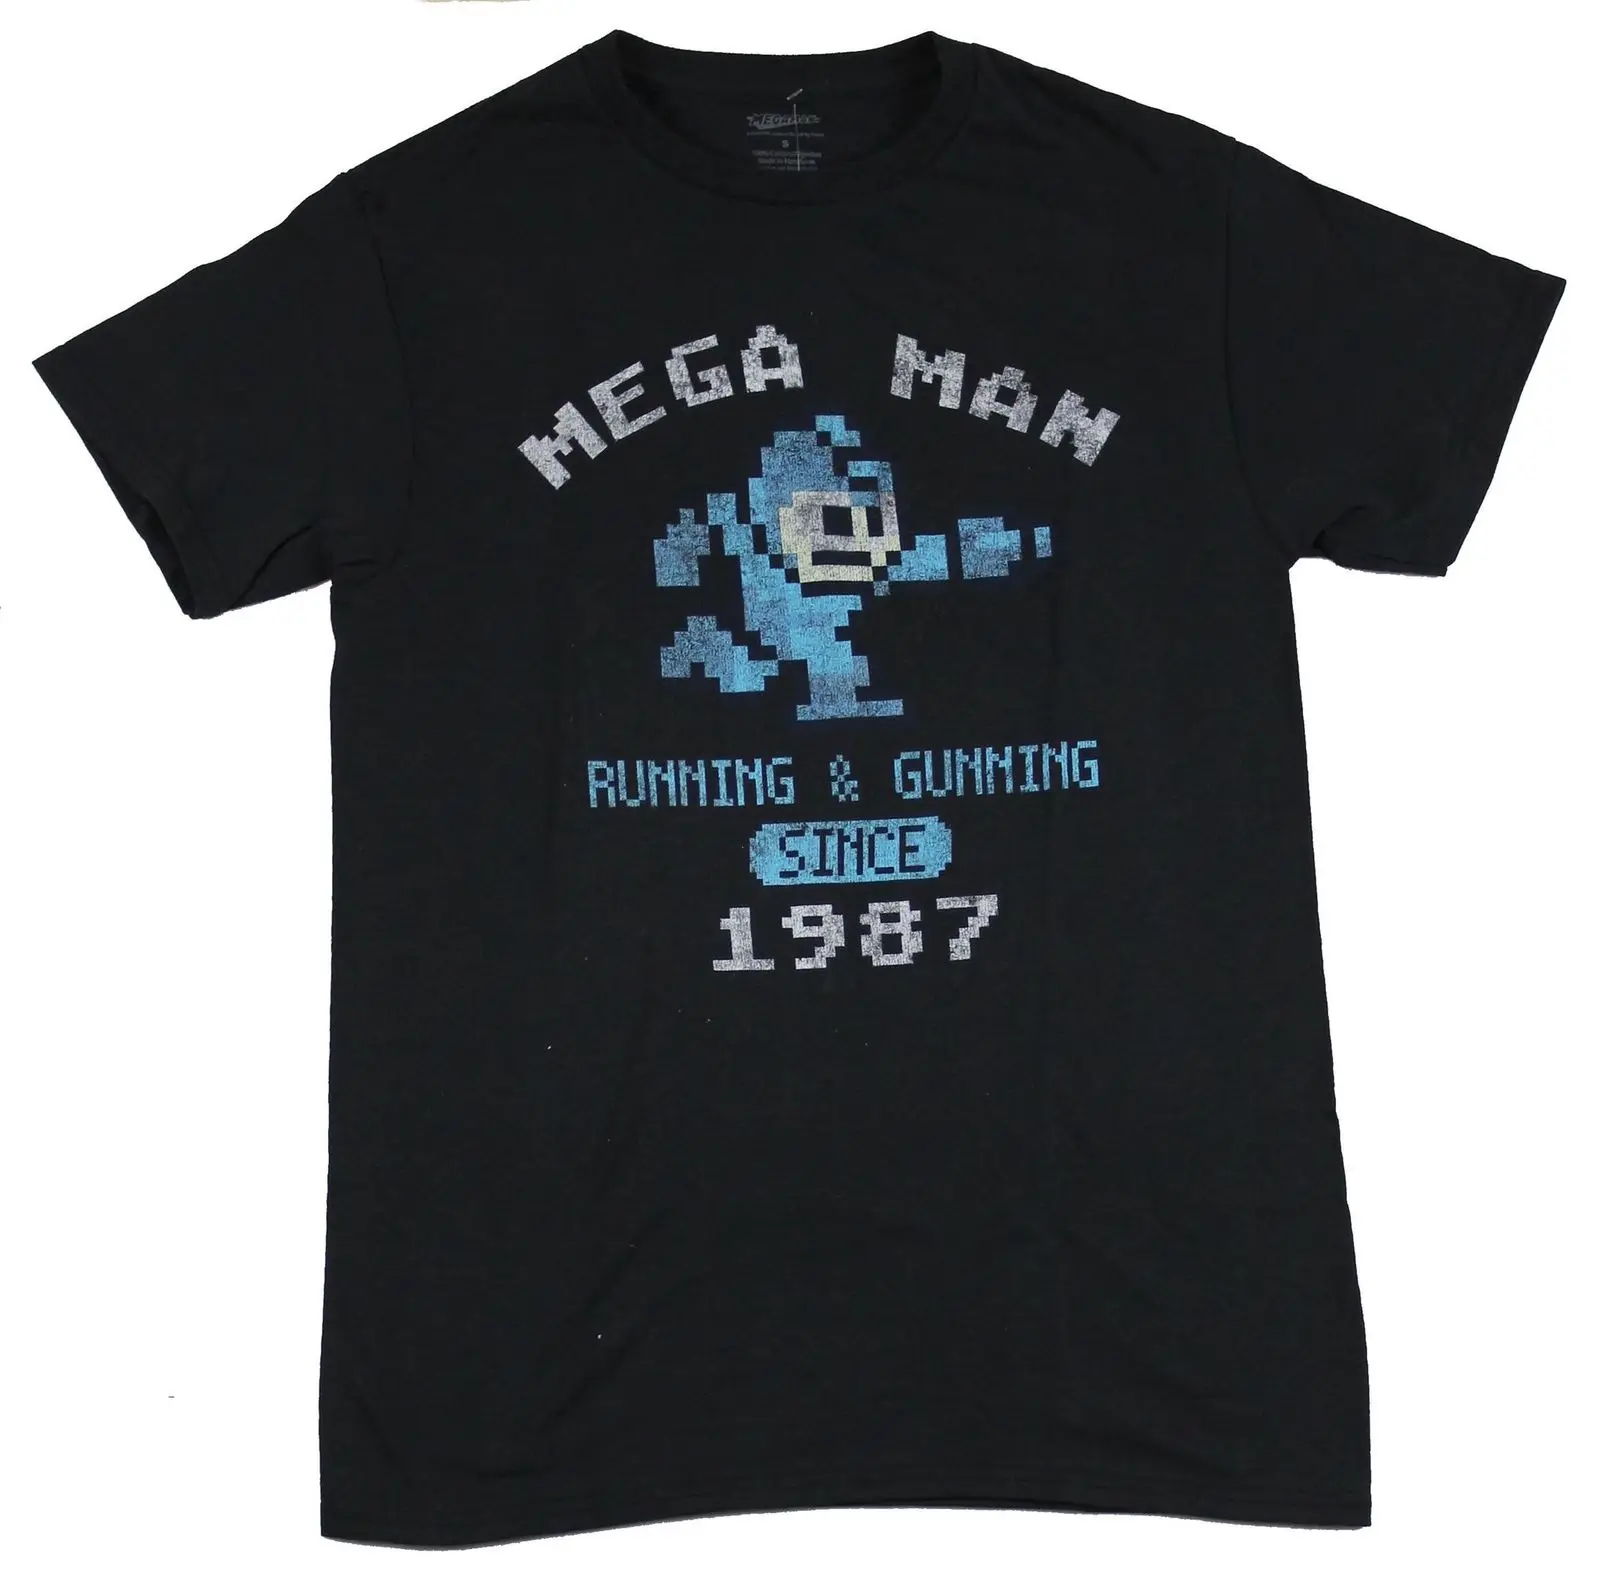 Мужская футболка Mega Man-Megaman Running and Gunning Since 1987, новая модная мужская футболка унисекс